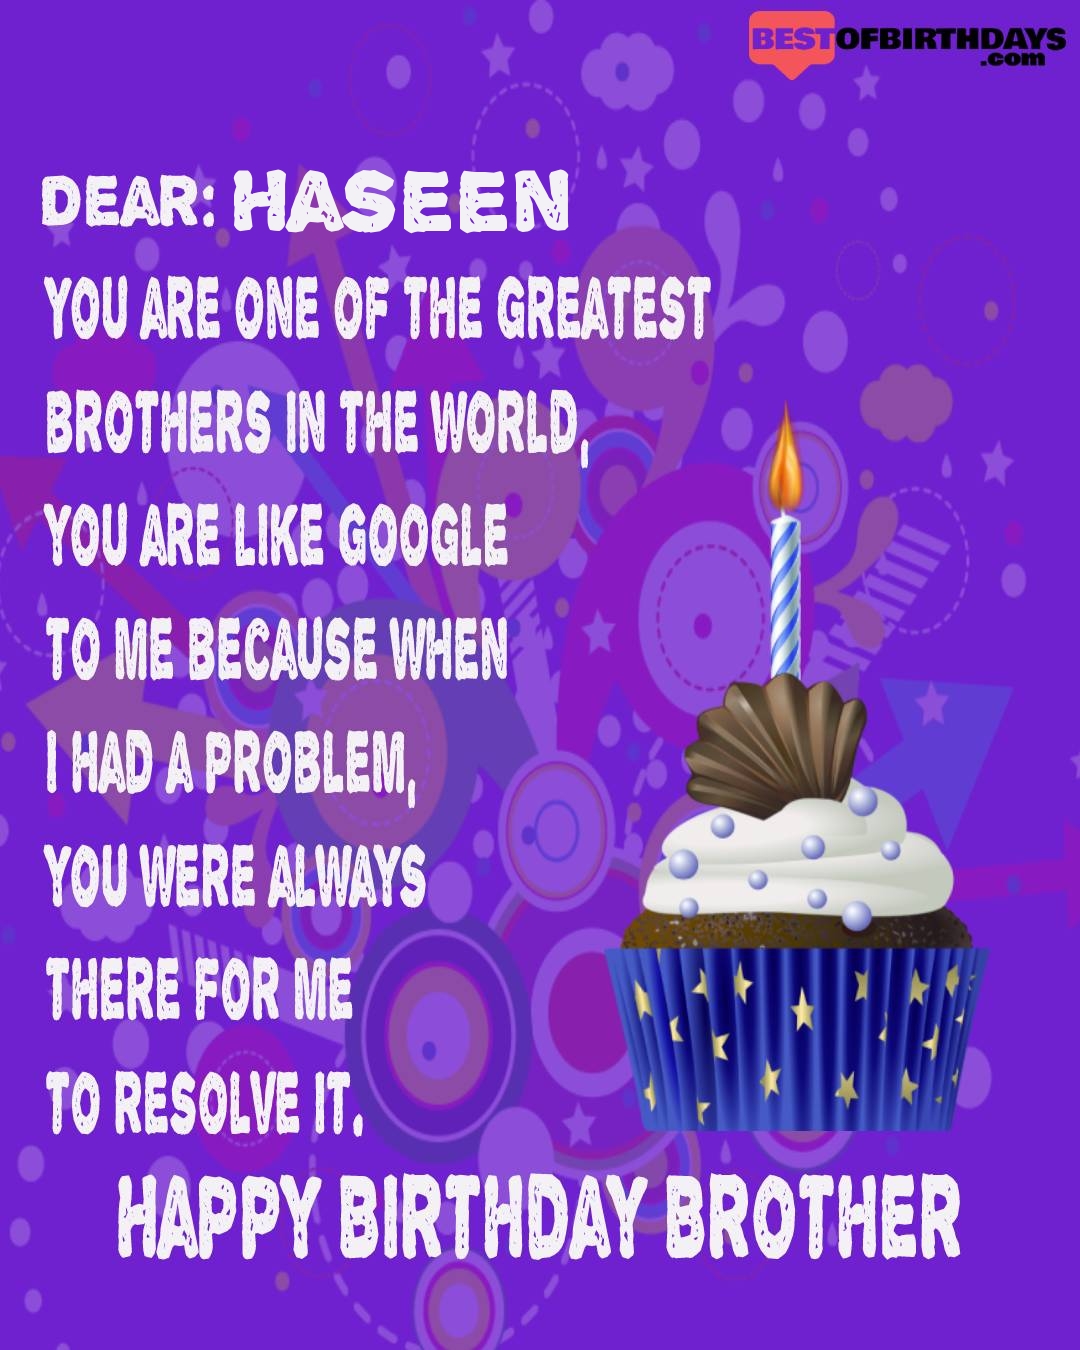 Happy birthday haseen bhai brother bro